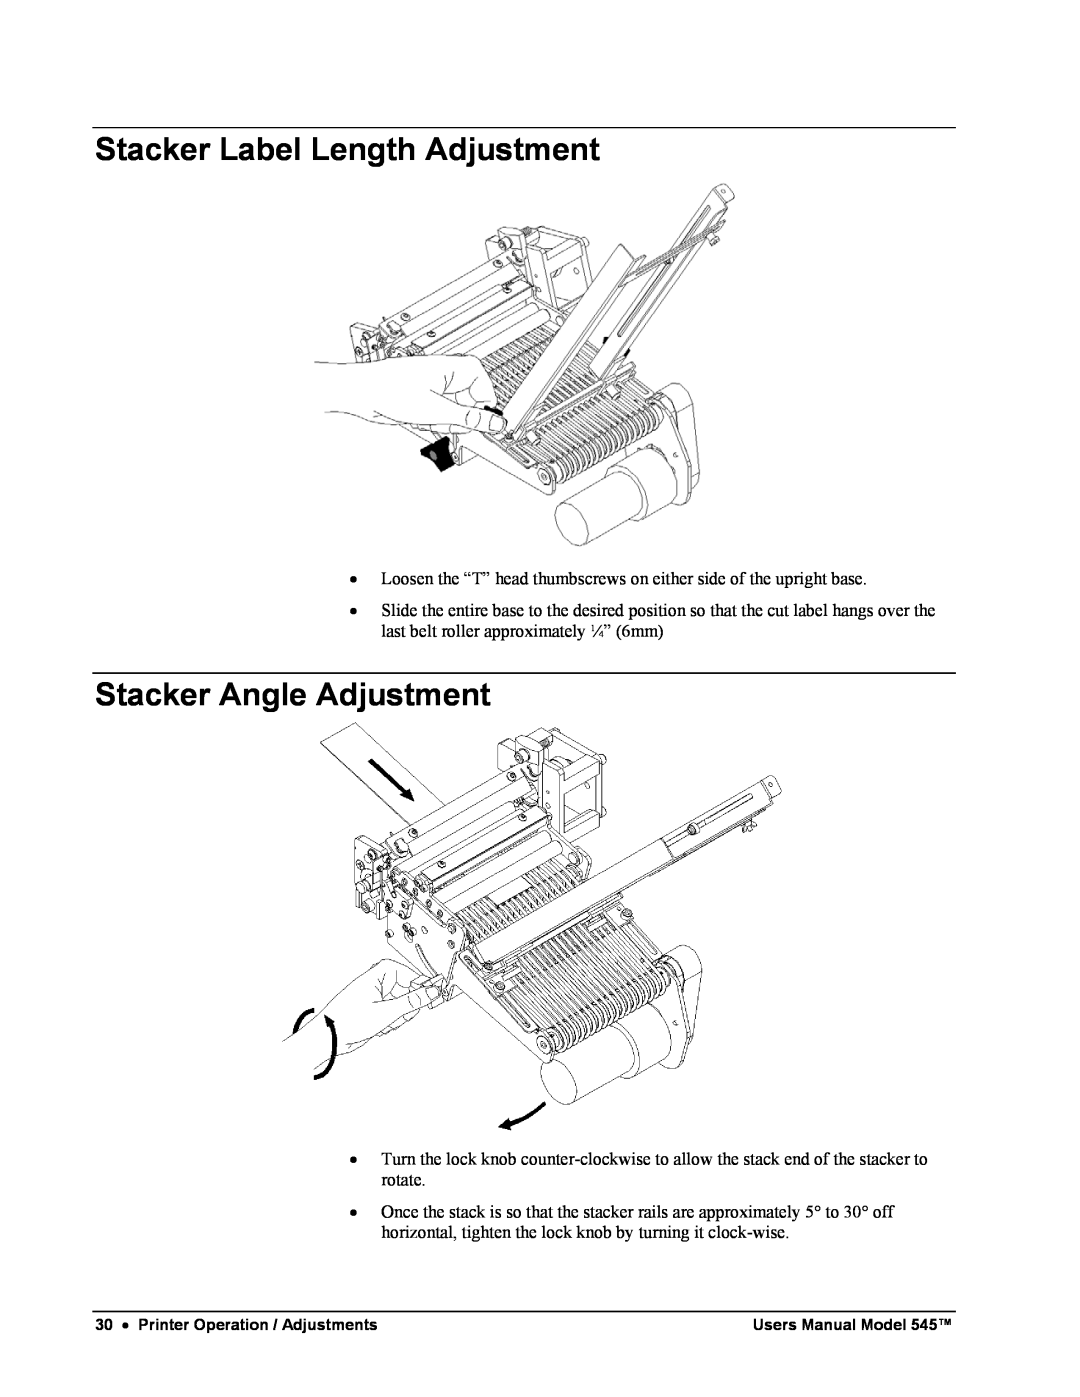 Paxar 545 user manual Stacker Label Length Adjustment, Stacker Angle Adjustment 